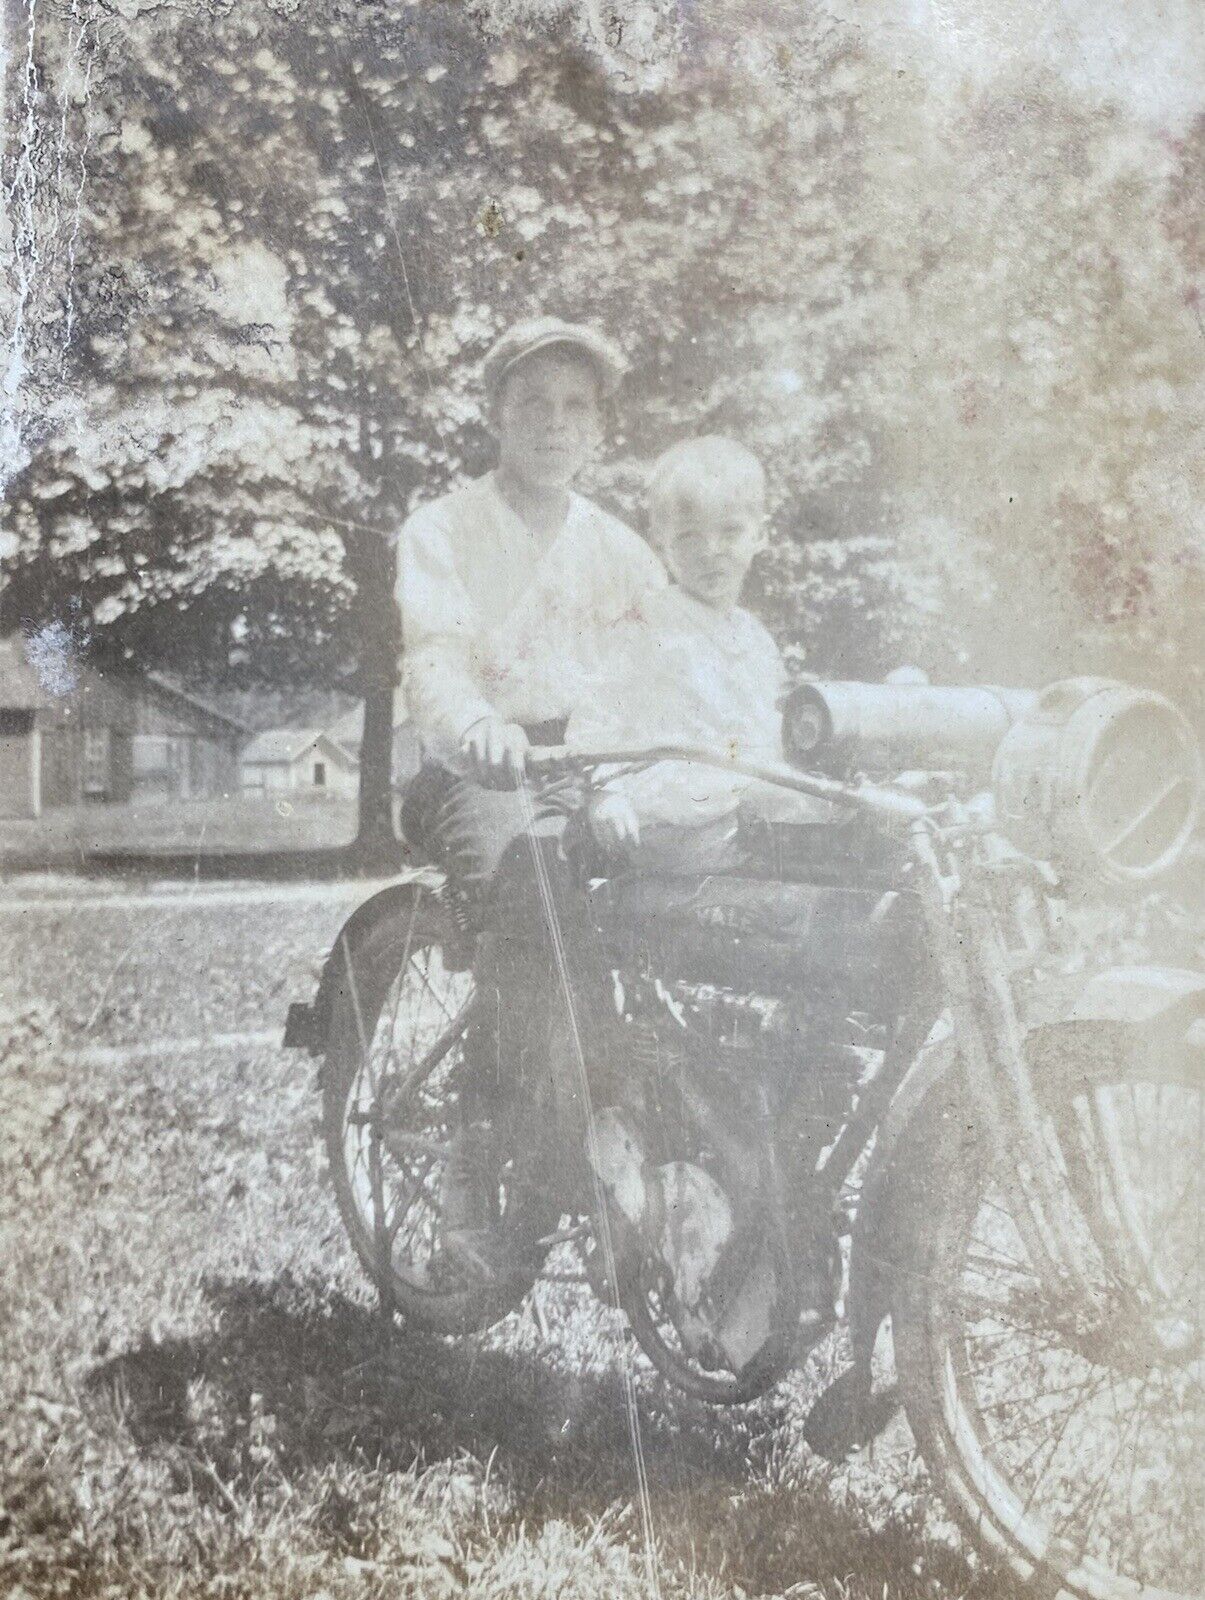 Motorcycle Yale Bike Two Boys on Vintage Motorbike Original Vintage Photo